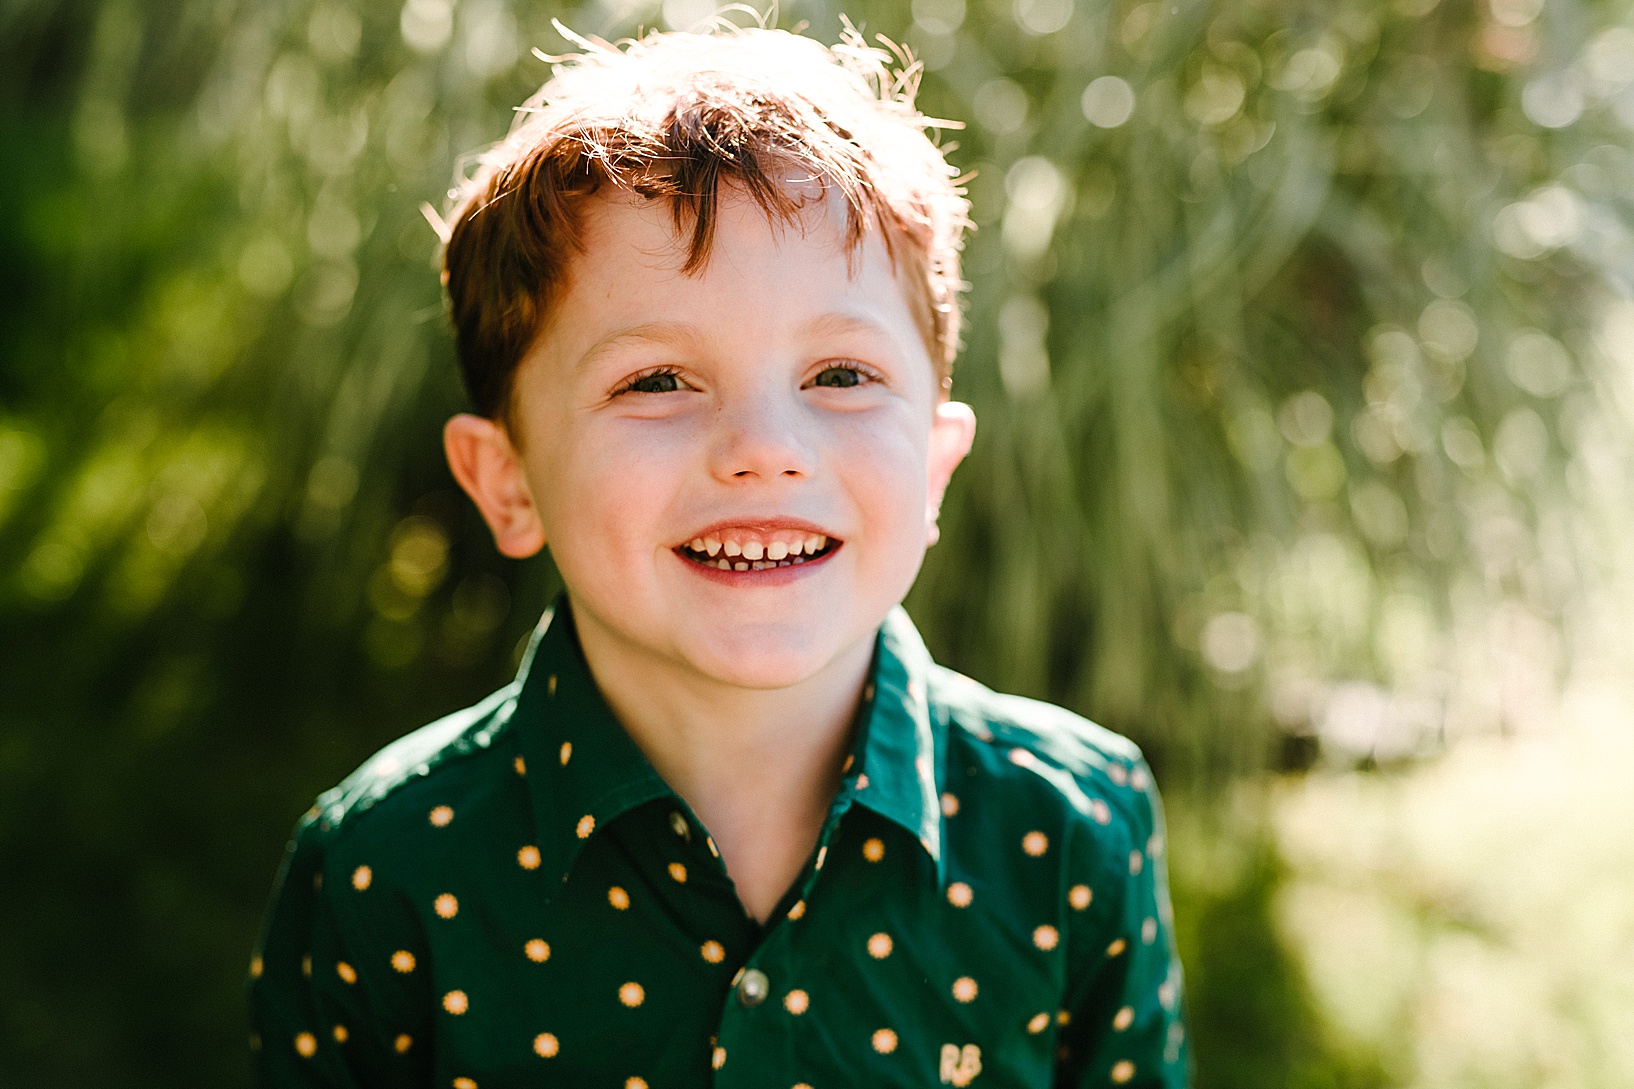 Red-headed boy in green polka dot shirt smiles at the camera